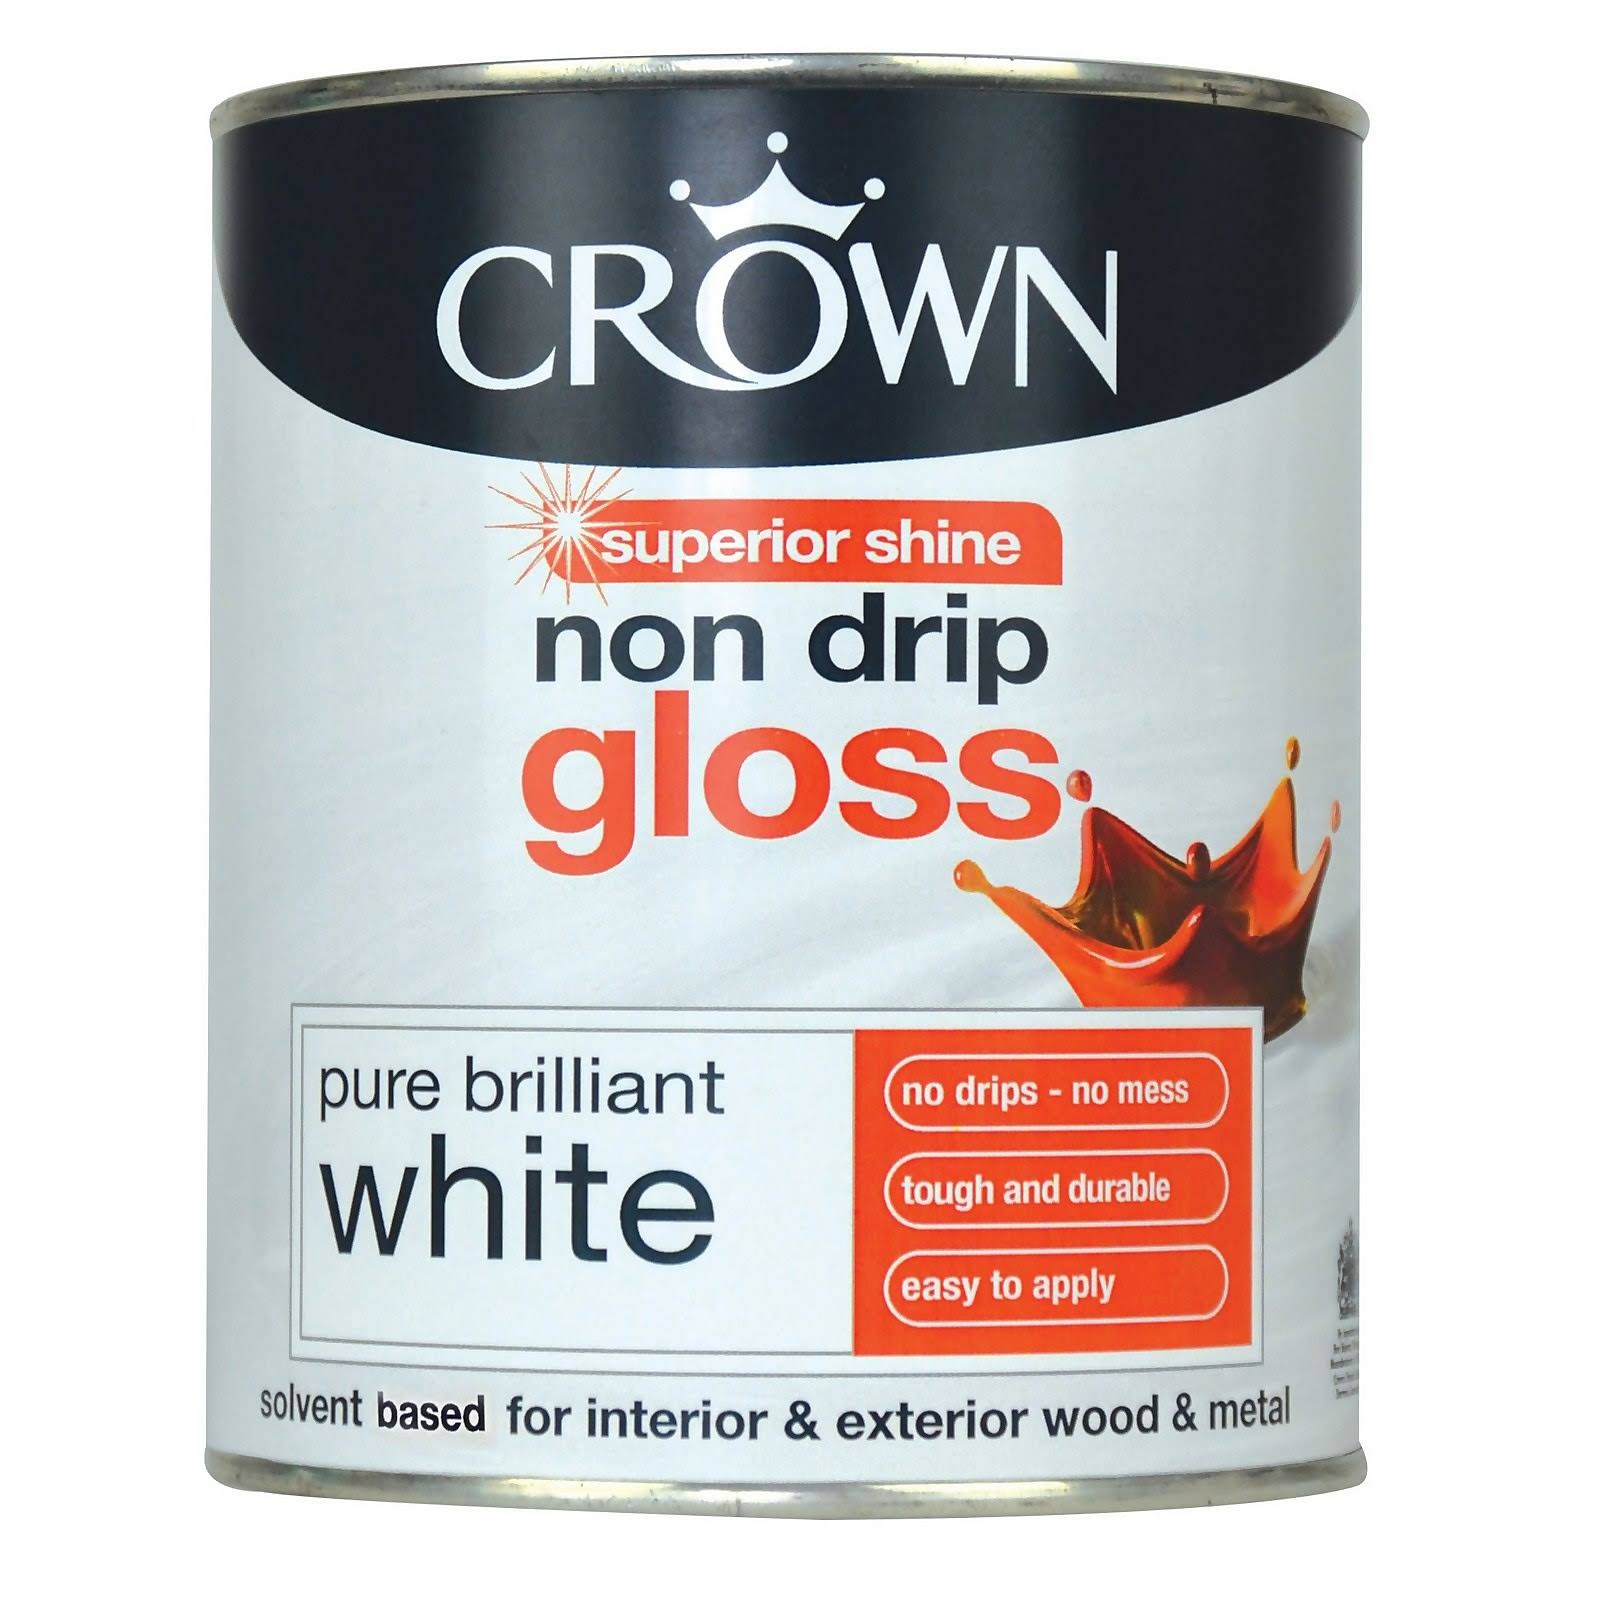 Crown Non Drip Gloss Paint - 750ml, Pure Brilliant White